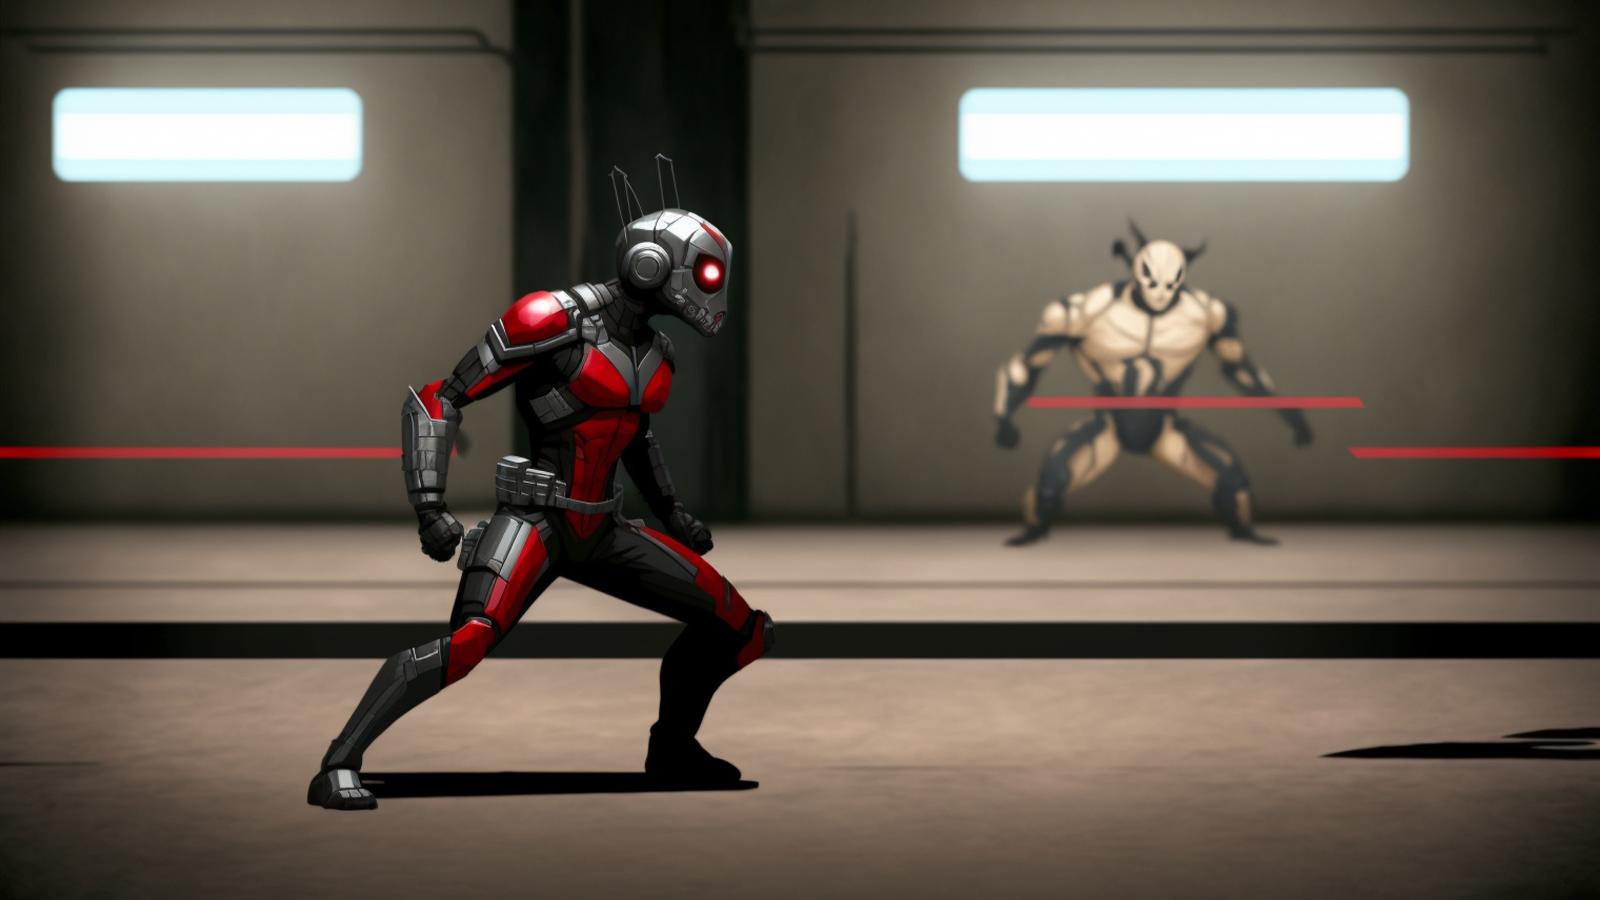 Combat man. The Ant игра Android.